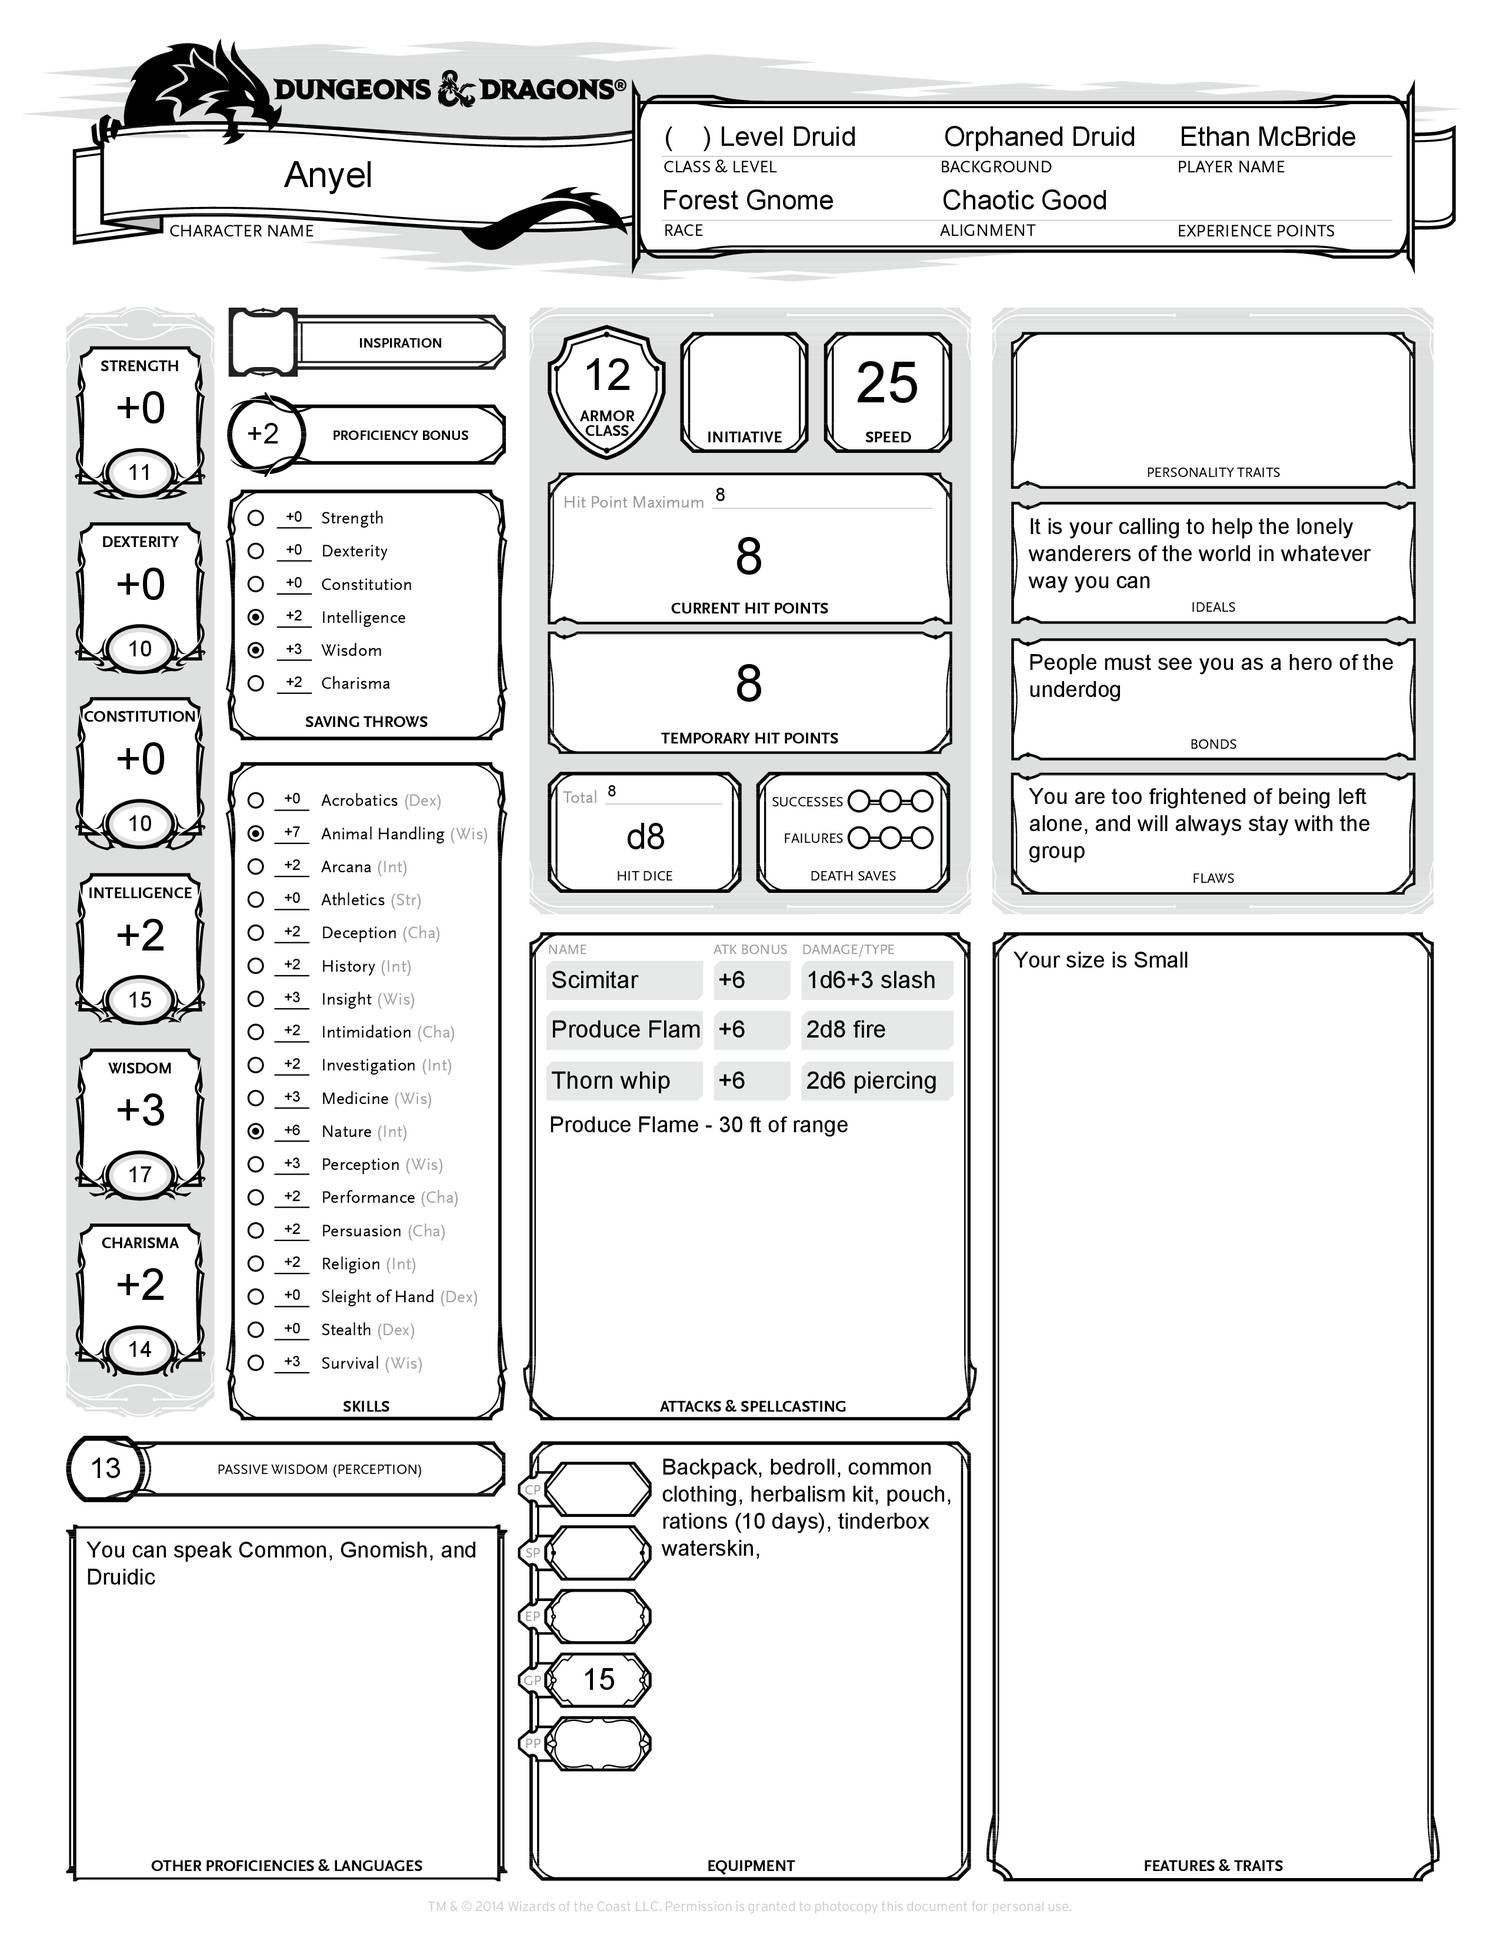 Anyel Character Sheet.pdf | DocDroid